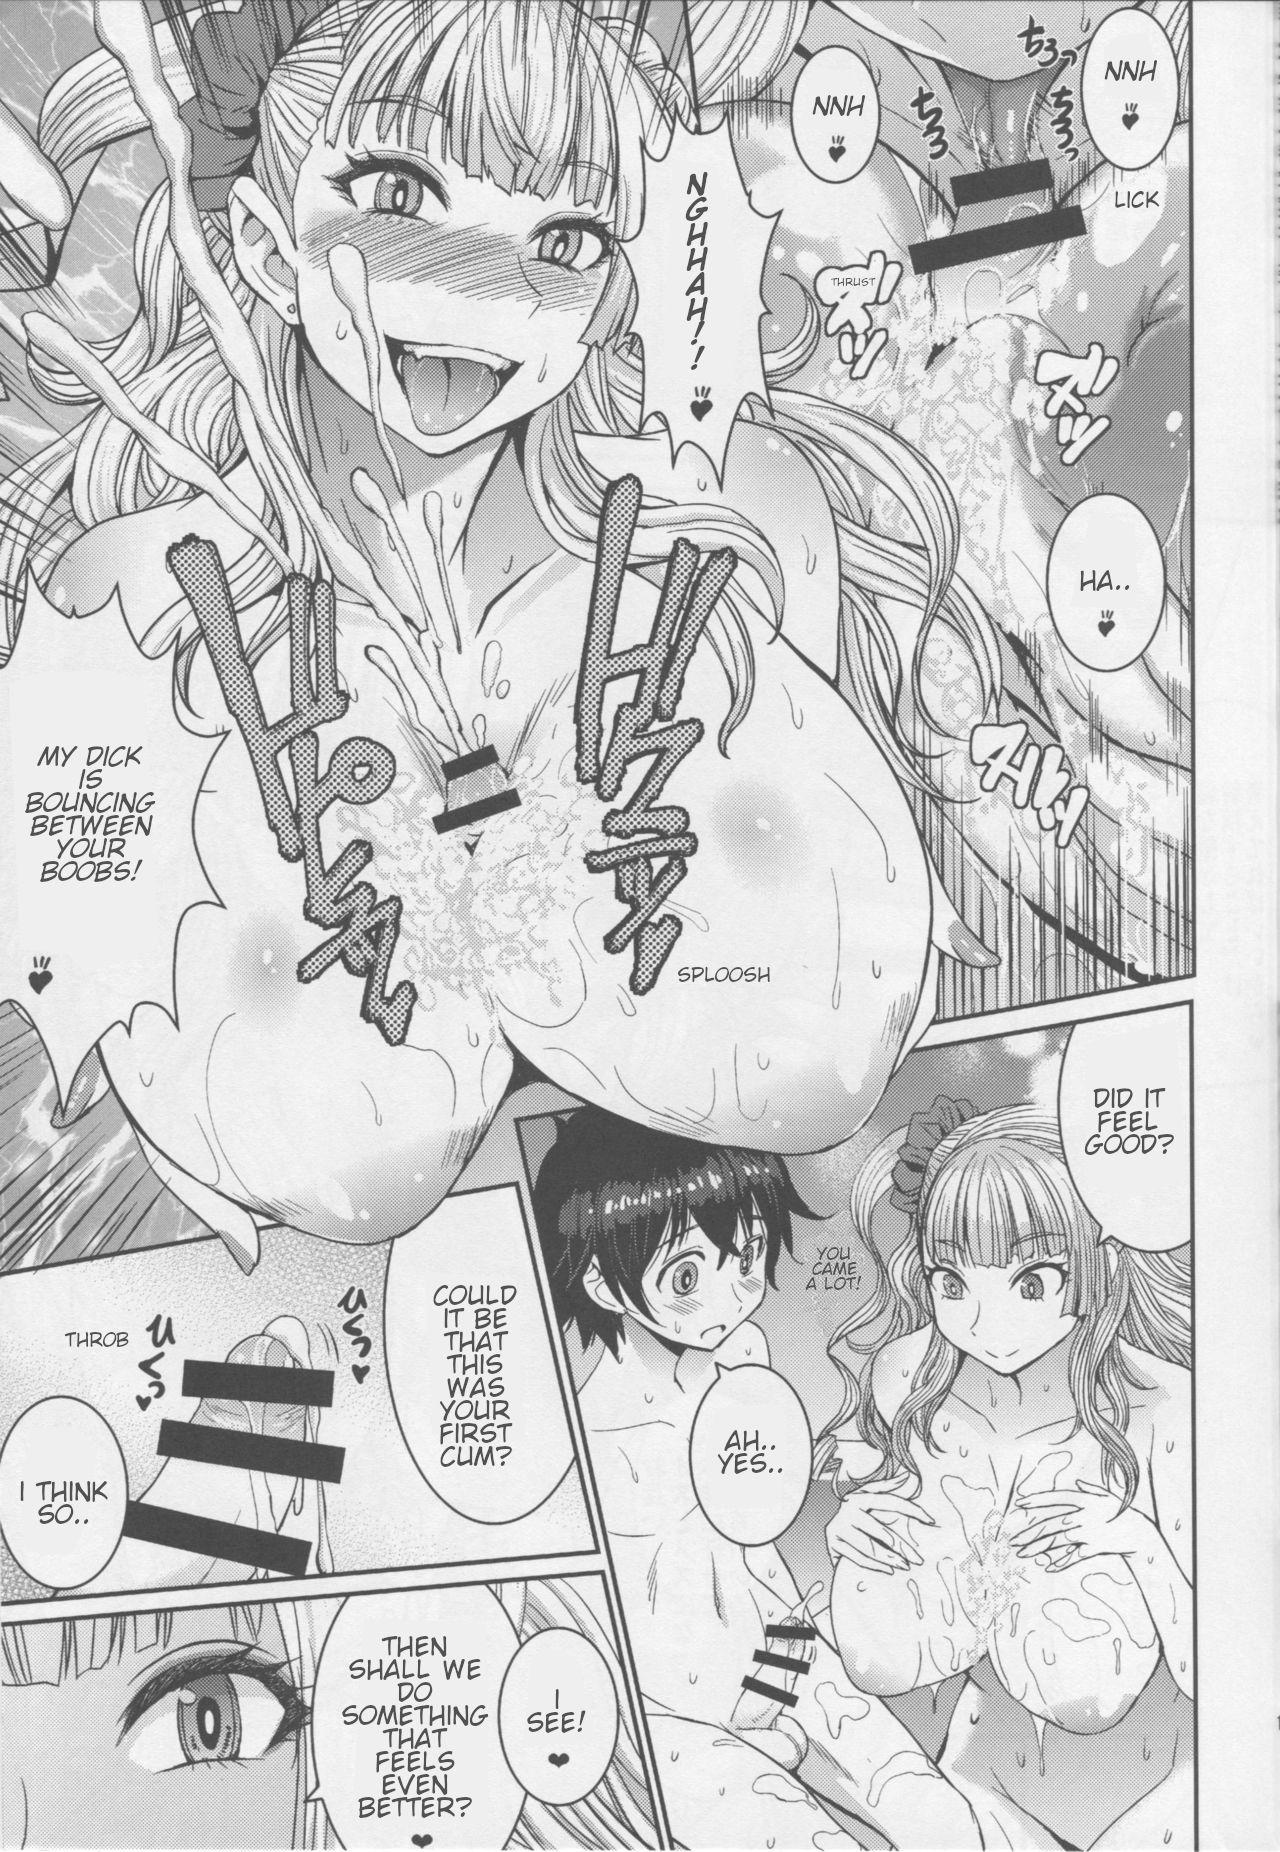 Chunky Boy Meets Gal - Oshiete galko-chan Blows - Page 12